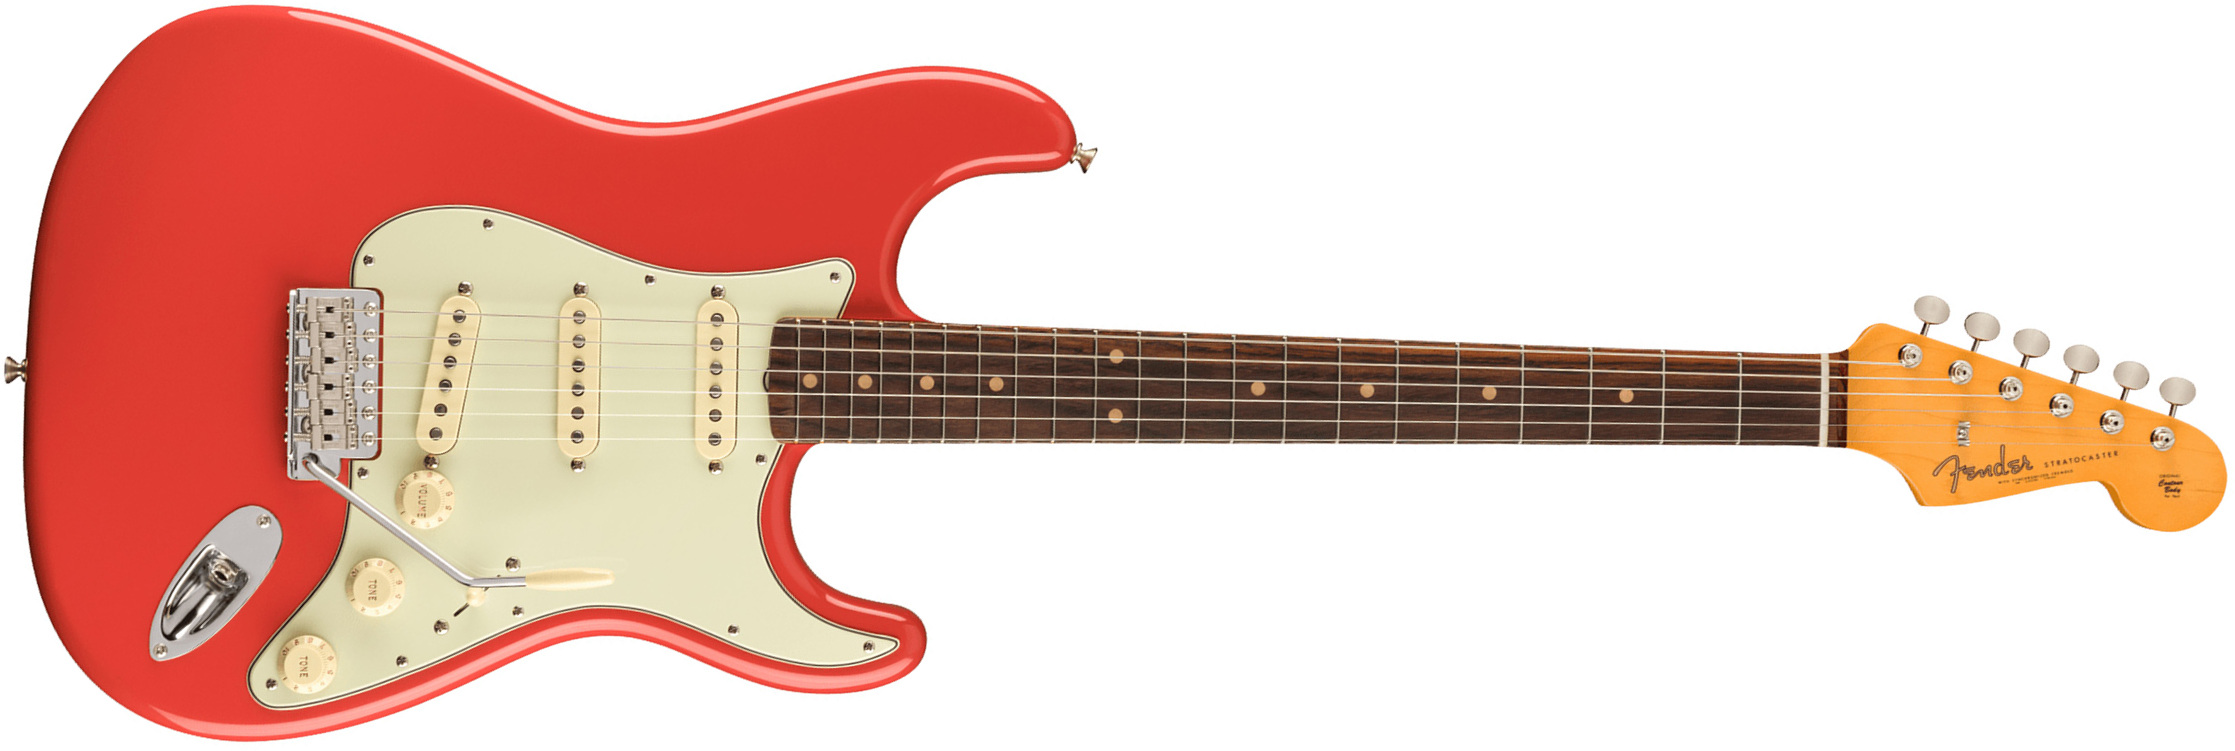 Fender Strat 1961 American Vintage Ii Usa 3s Trem Rw - Fiesta Red - E-Gitarre in Str-Form - Main picture